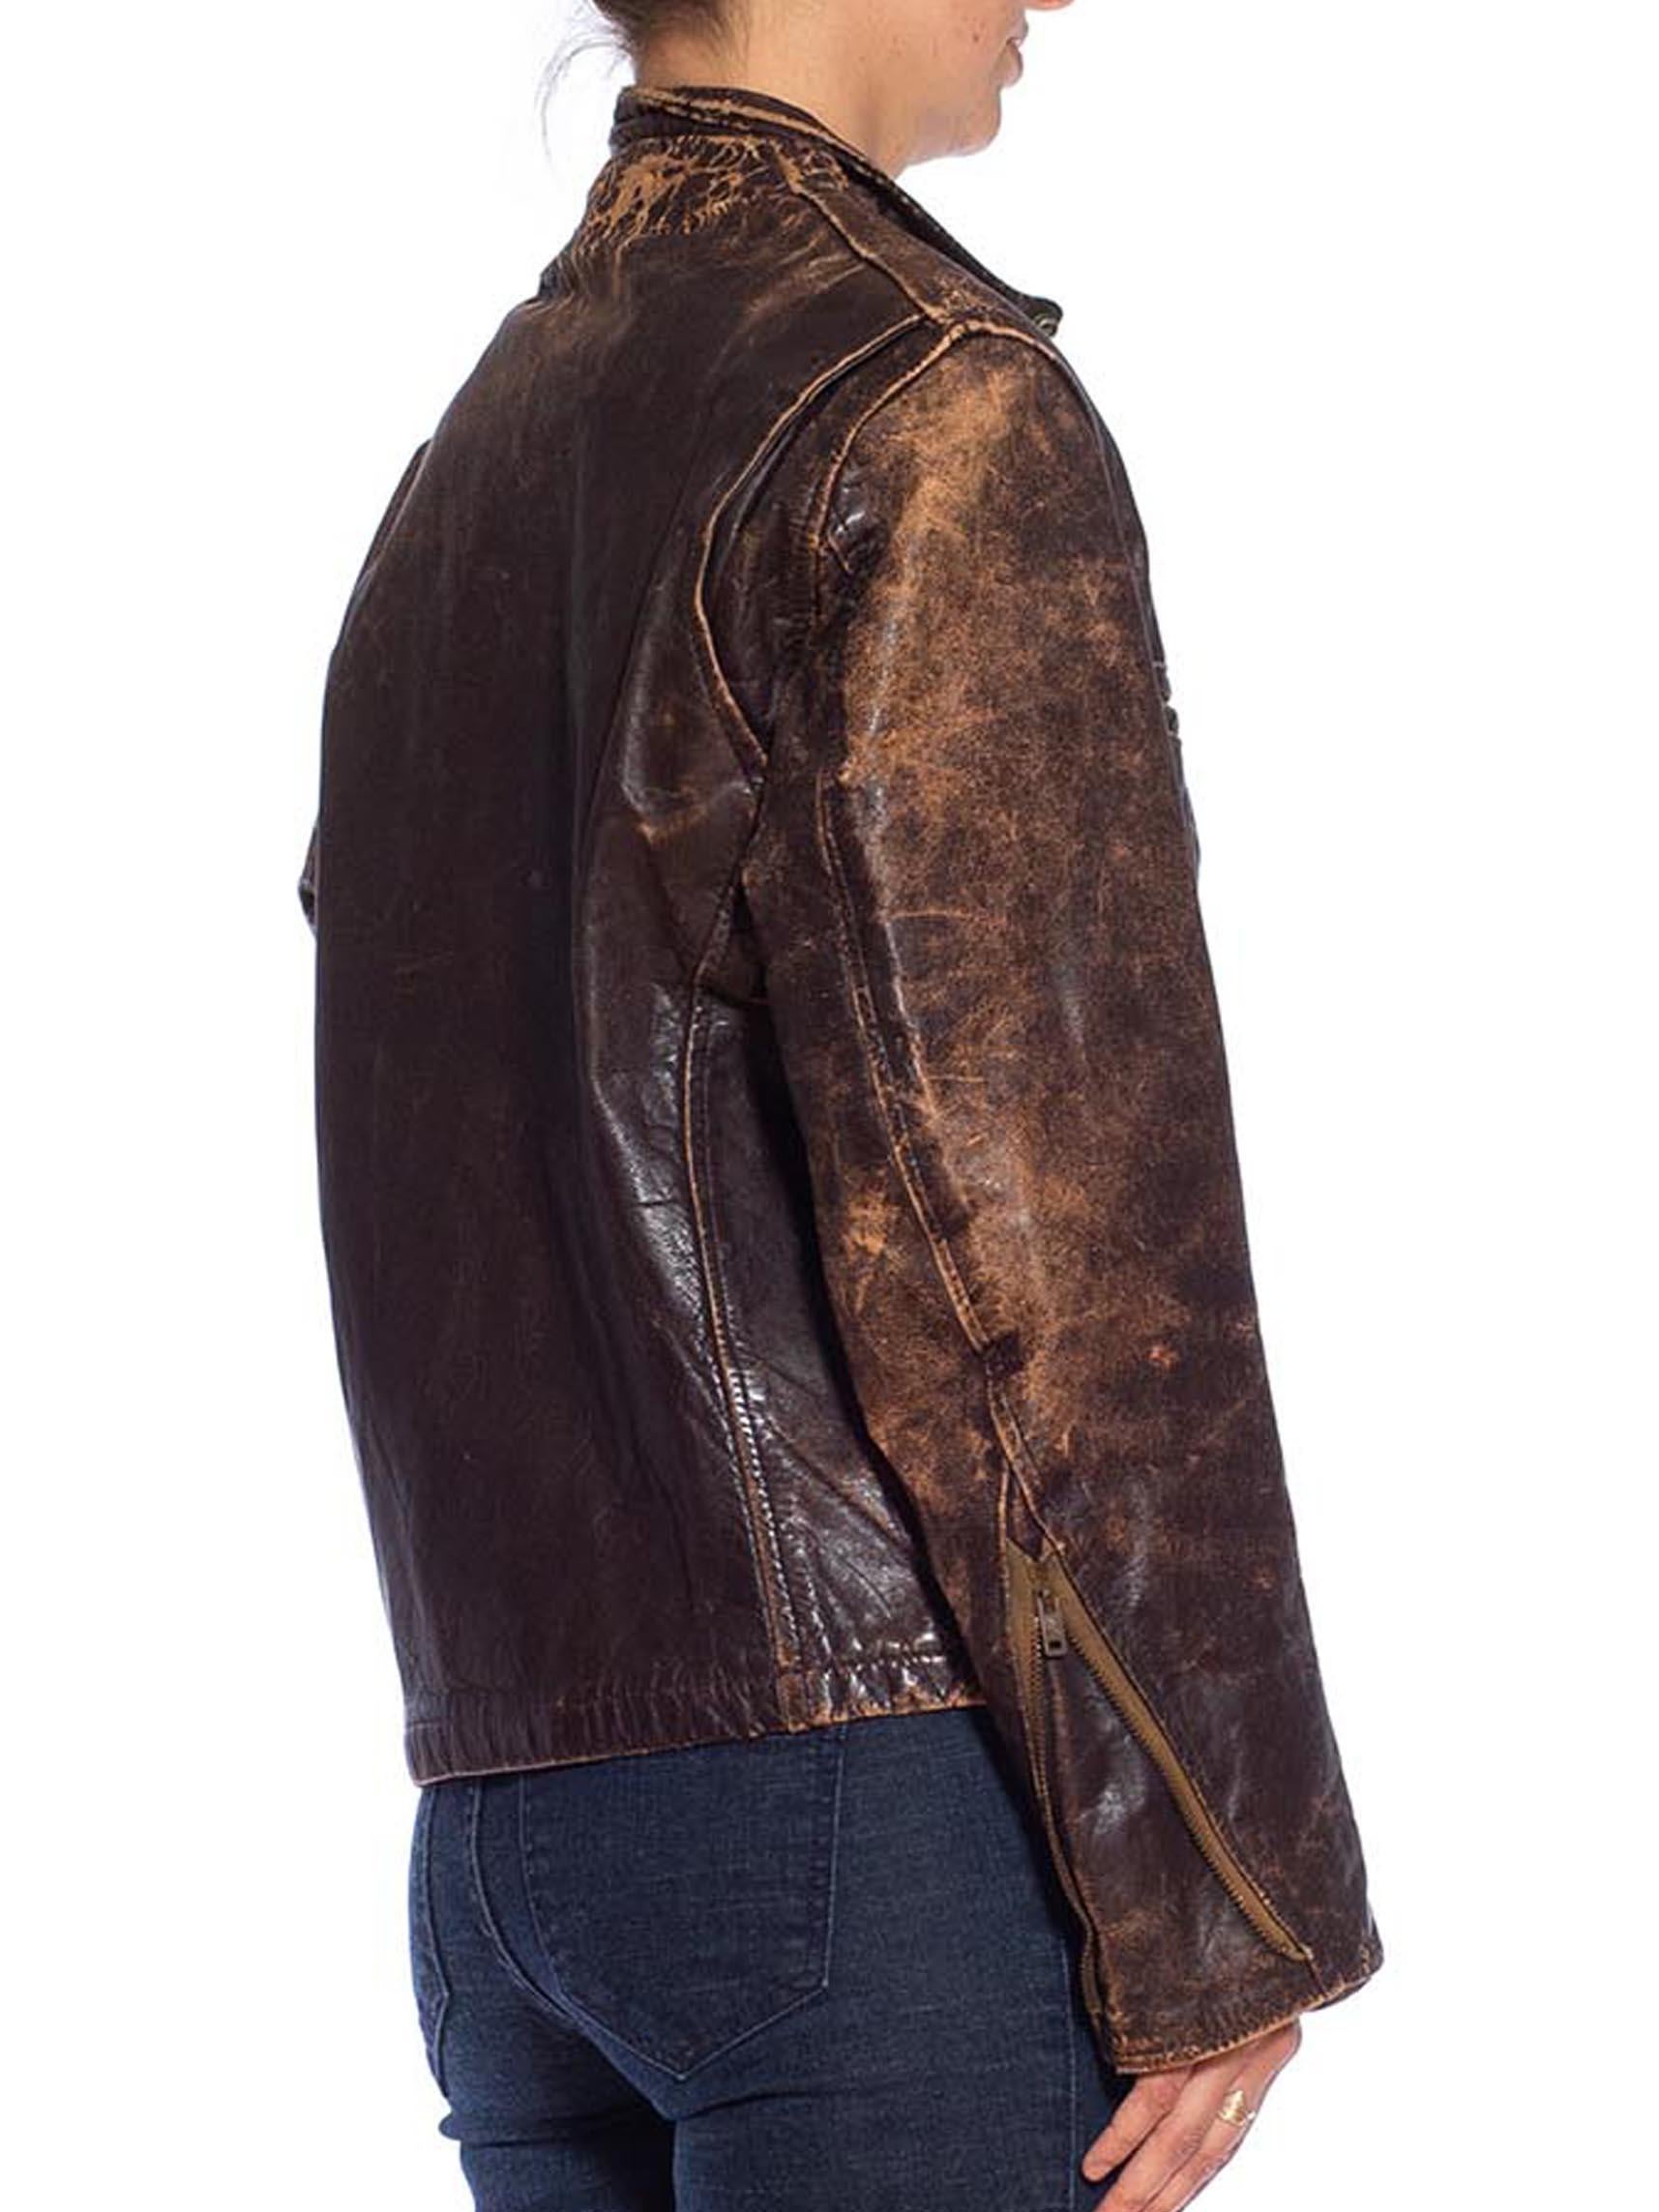 1940s motorcycle jacket